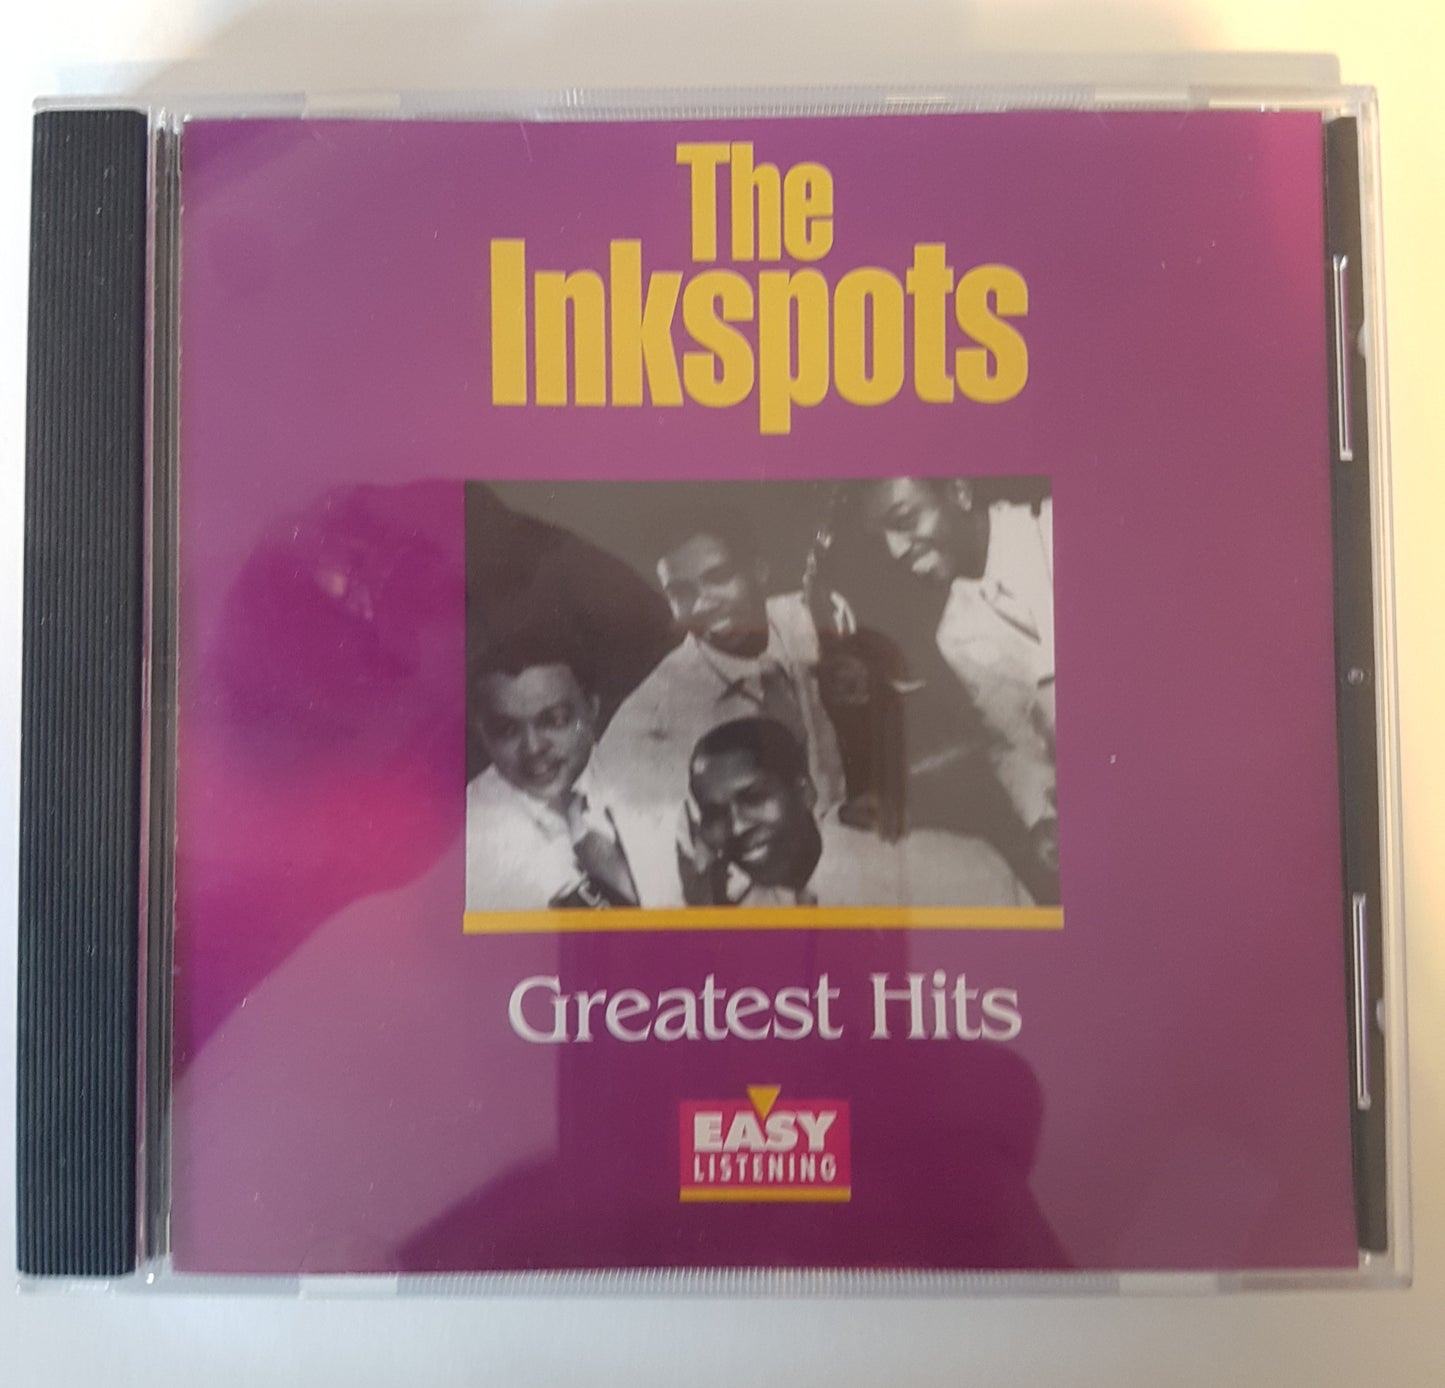 The Inkspots, The Inkspots Greatest Hits (1CD)